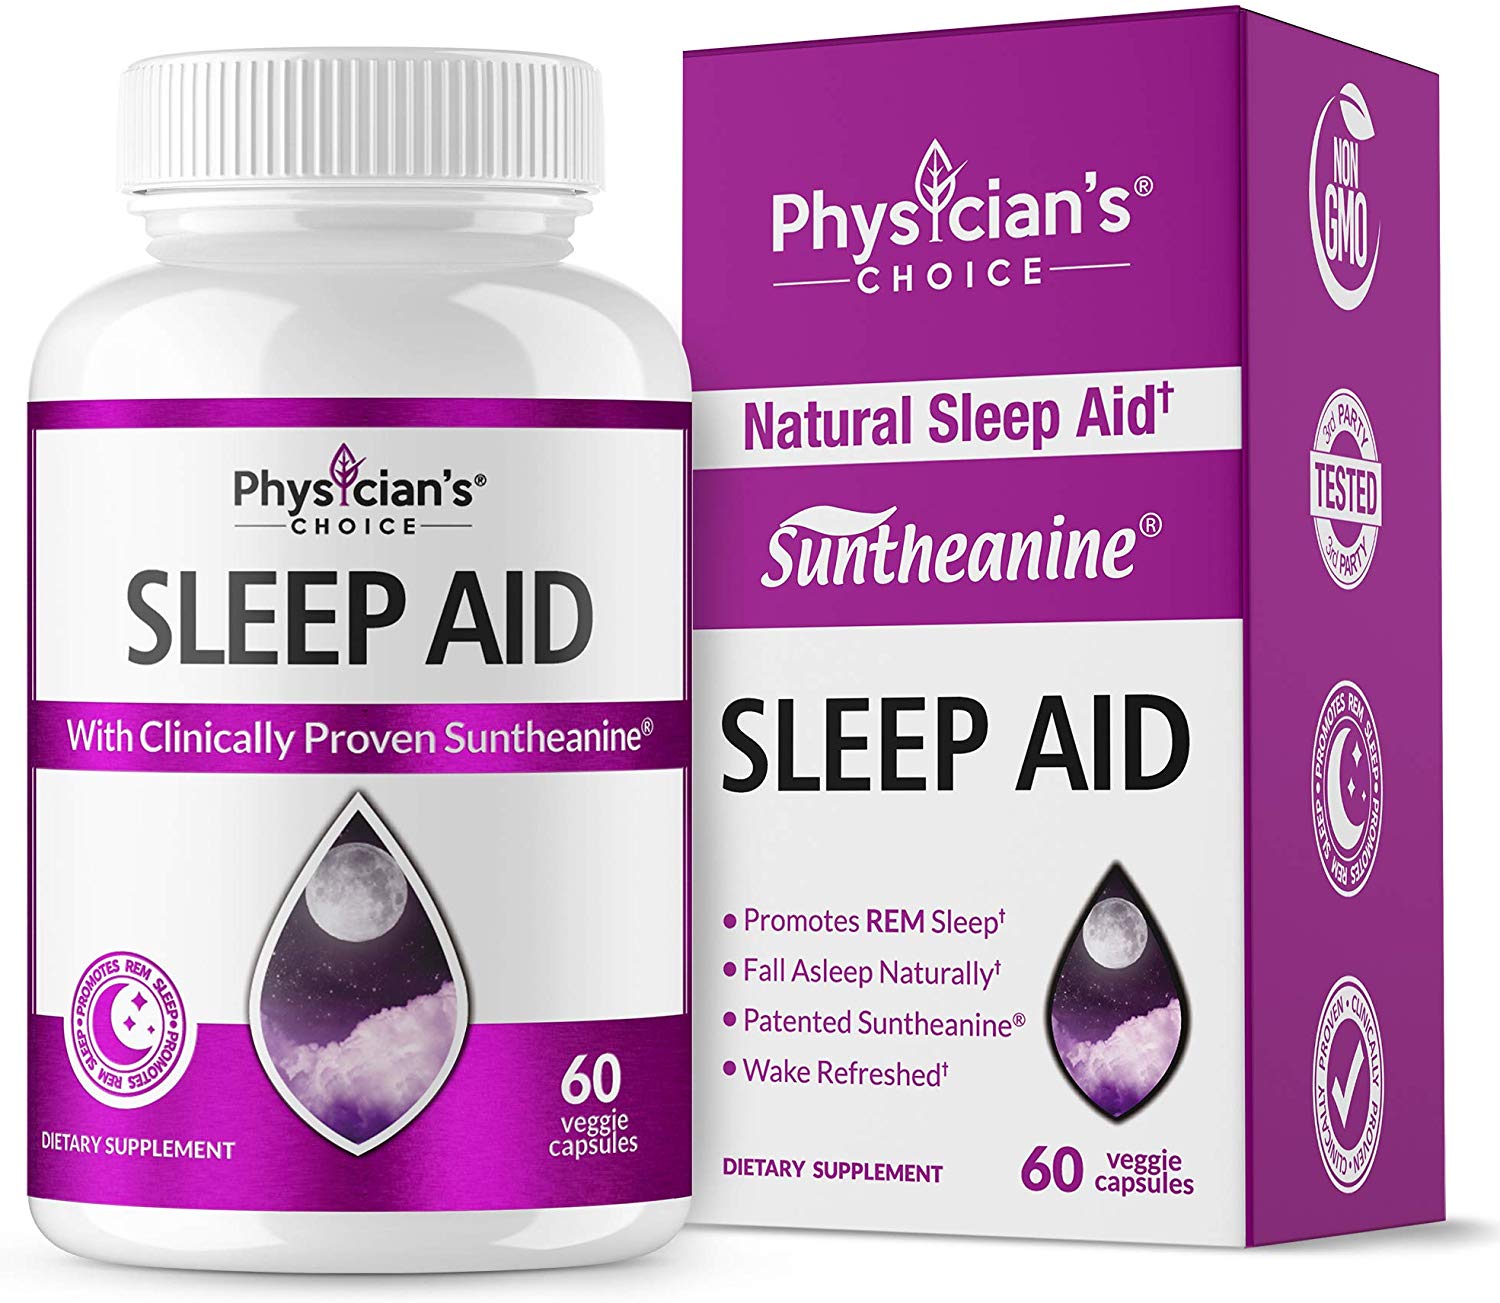 9. Physician's Choice NatREM Natural Sleeping Aid